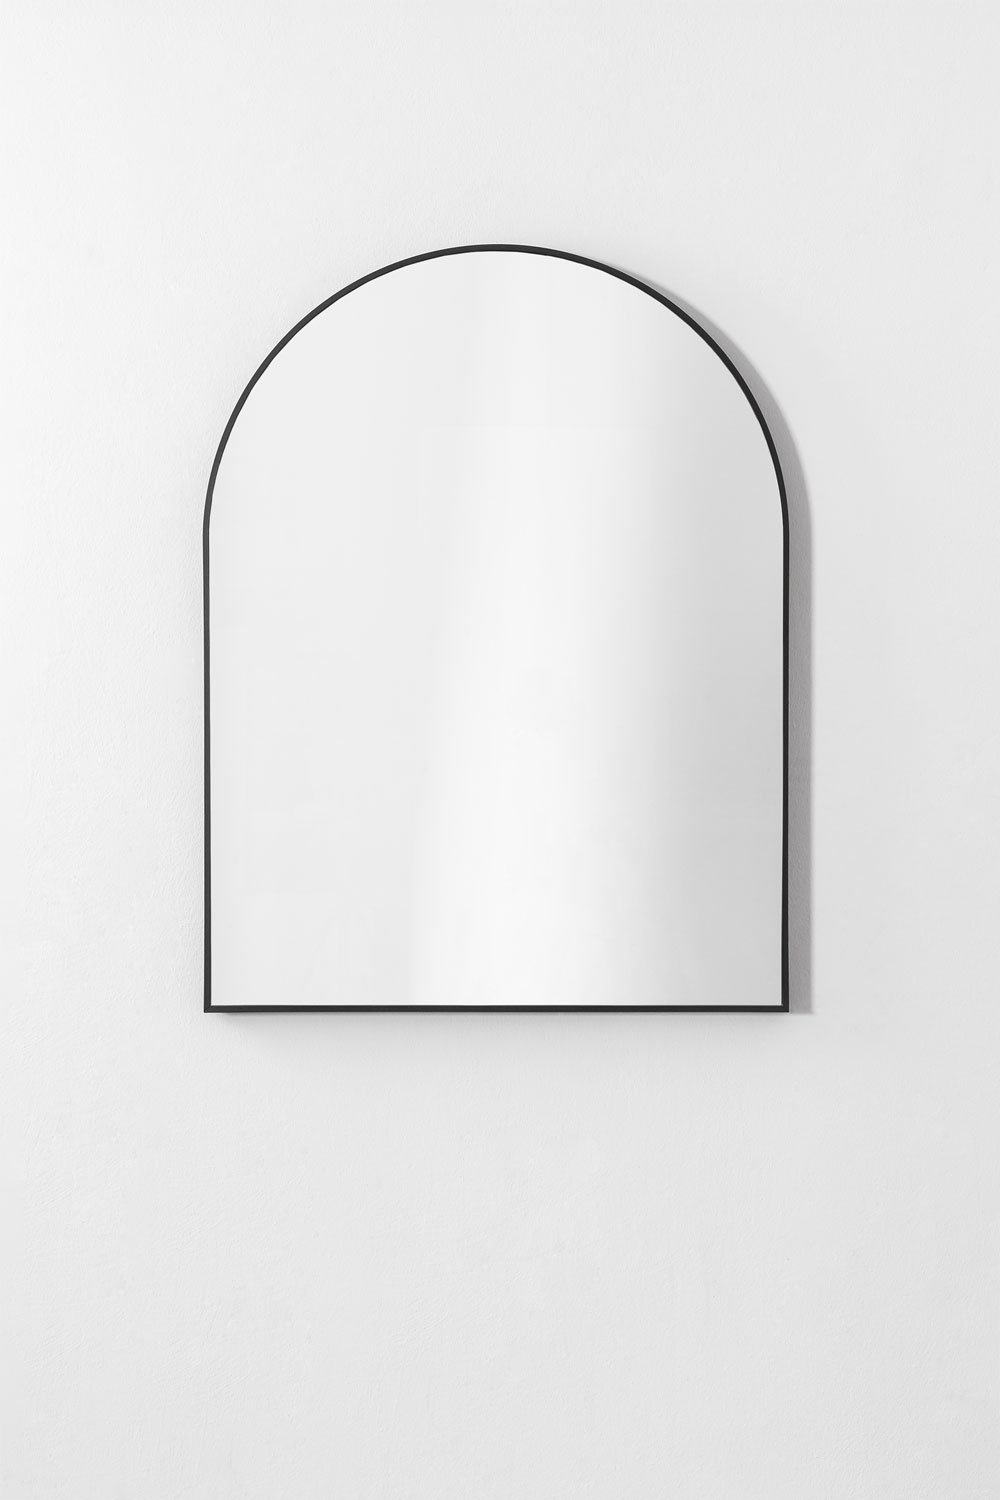 Miroir mural de salle de bain en aluminium (65x85 cm) Bolenge, image de la galerie 1